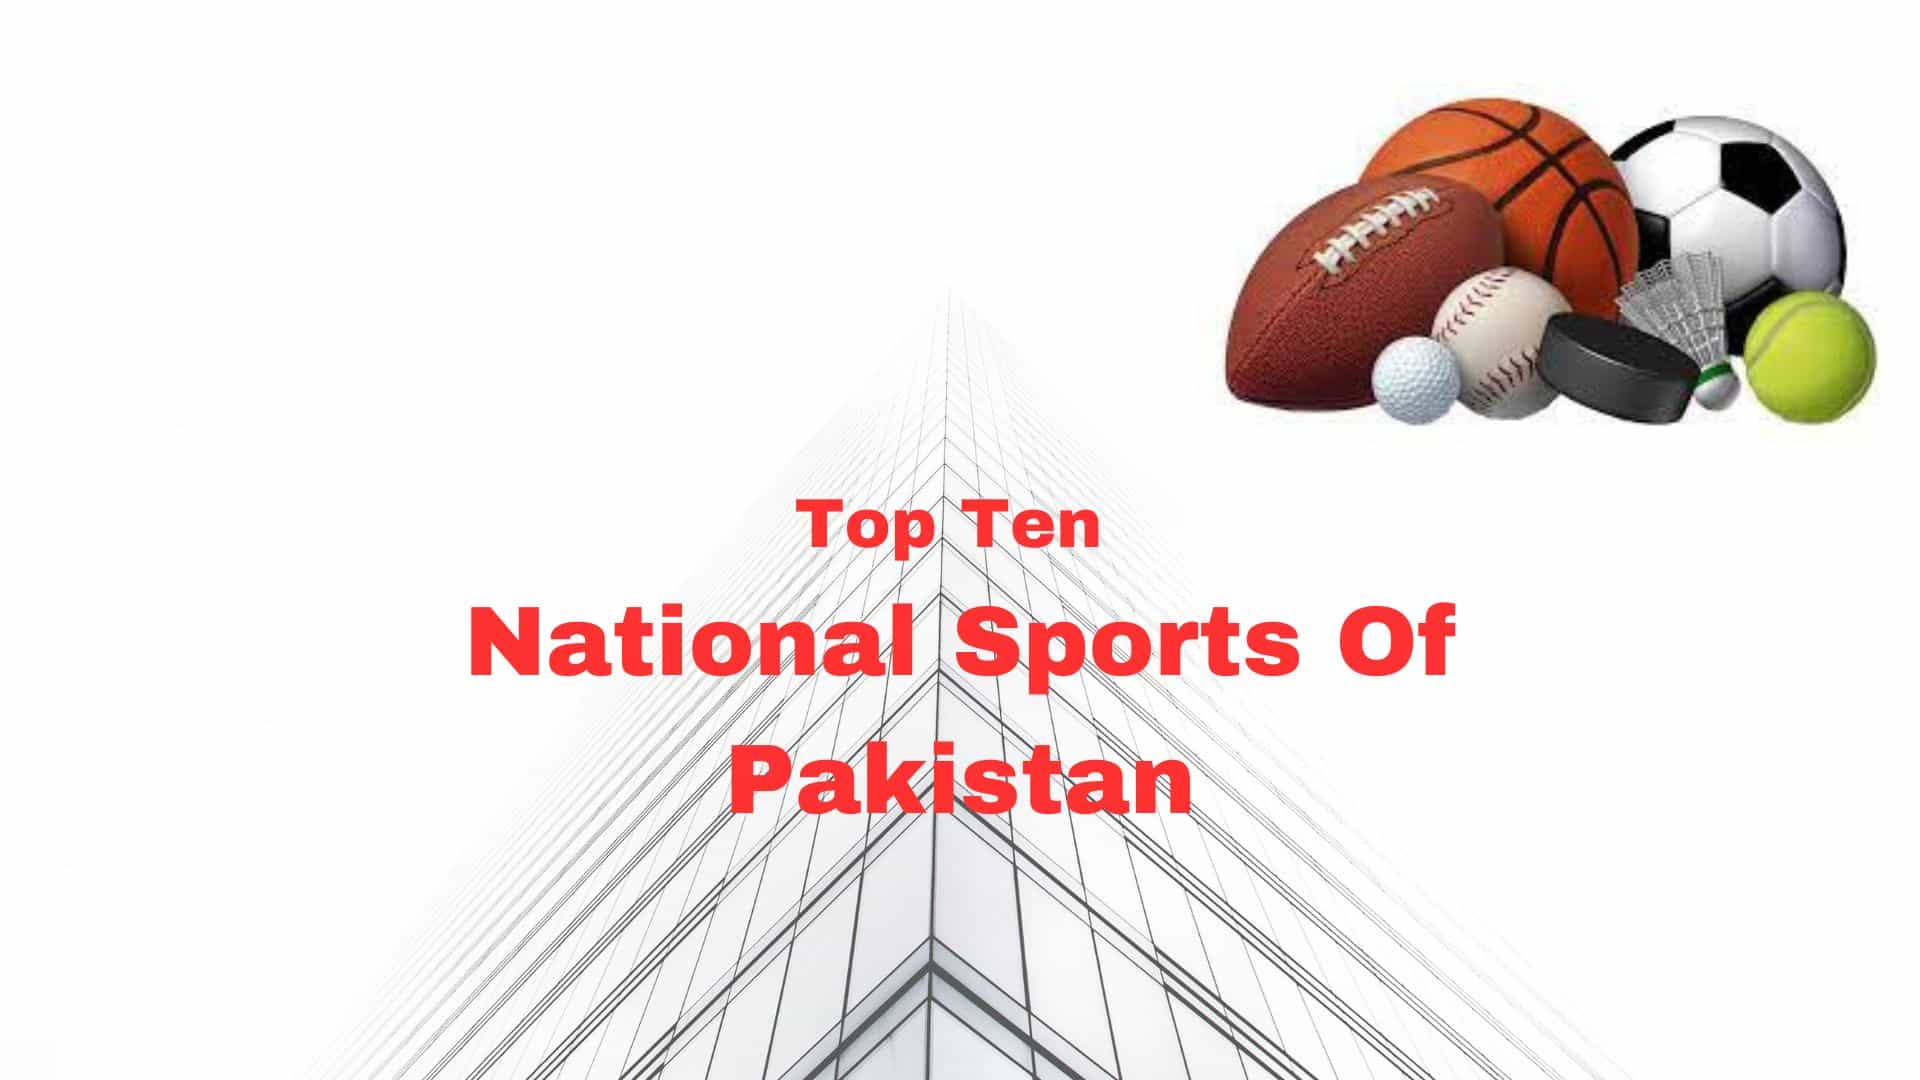 Top Ten National Sports Of Pakistan